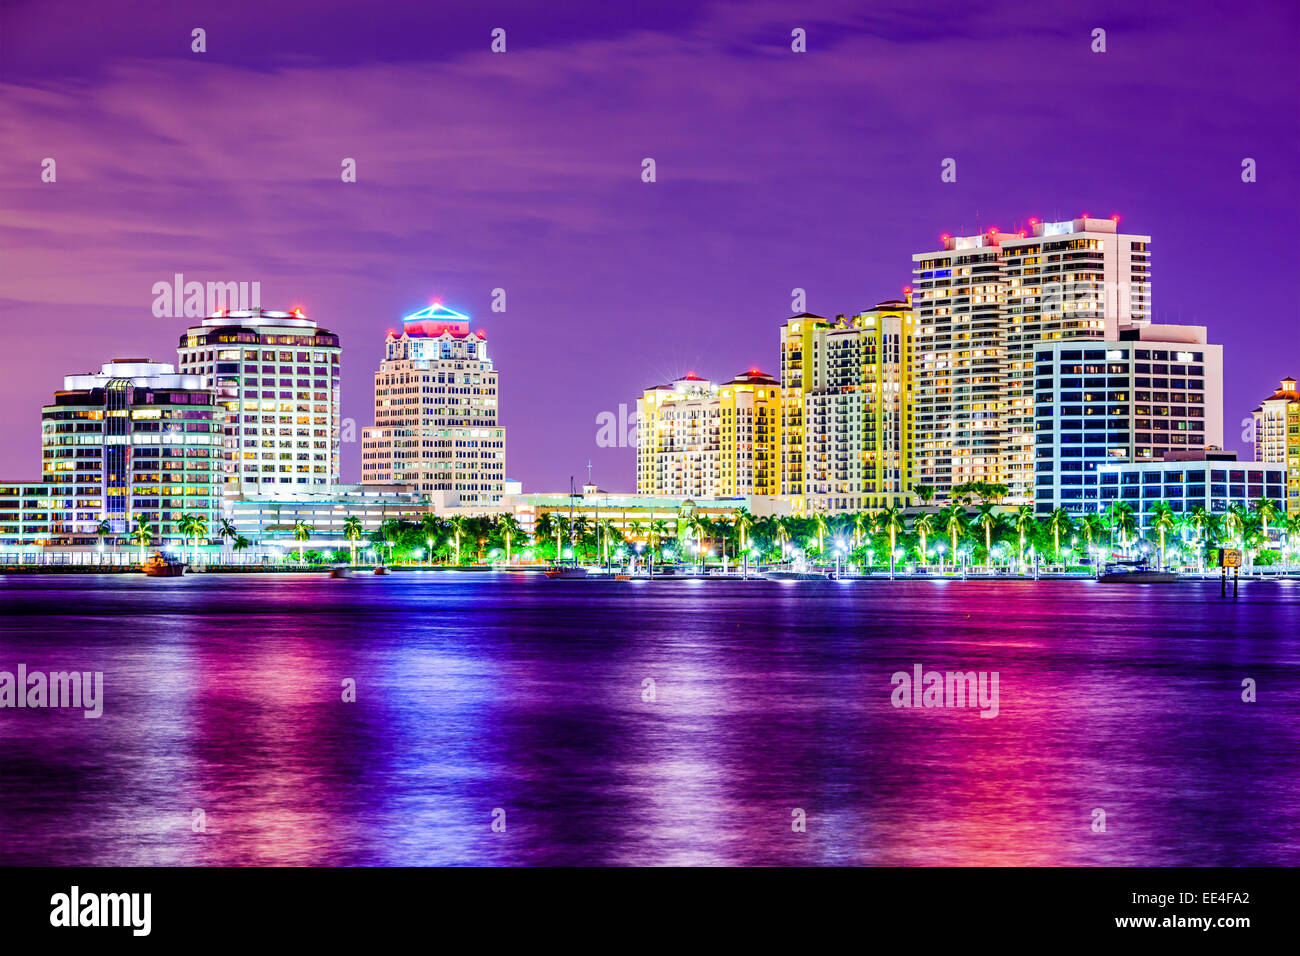 West Palm Beach, Floride, USA ville Atlantid sur l'Intracoastal Waterway. Banque D'Images